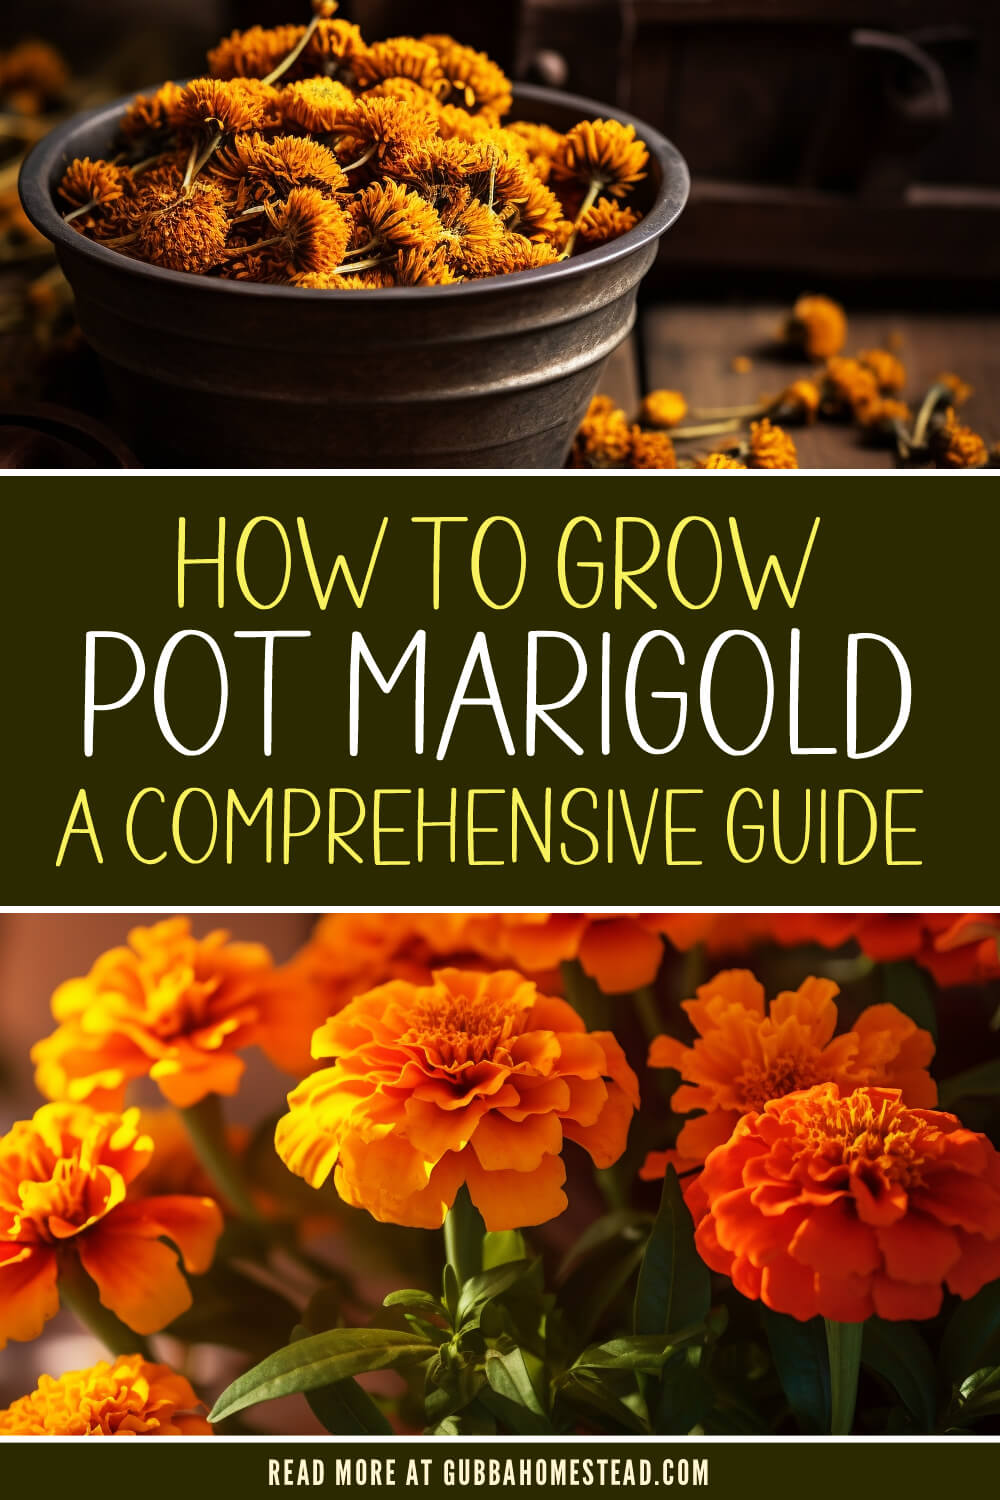 How to Grow Pot Marigold: A Comprehensive Guide